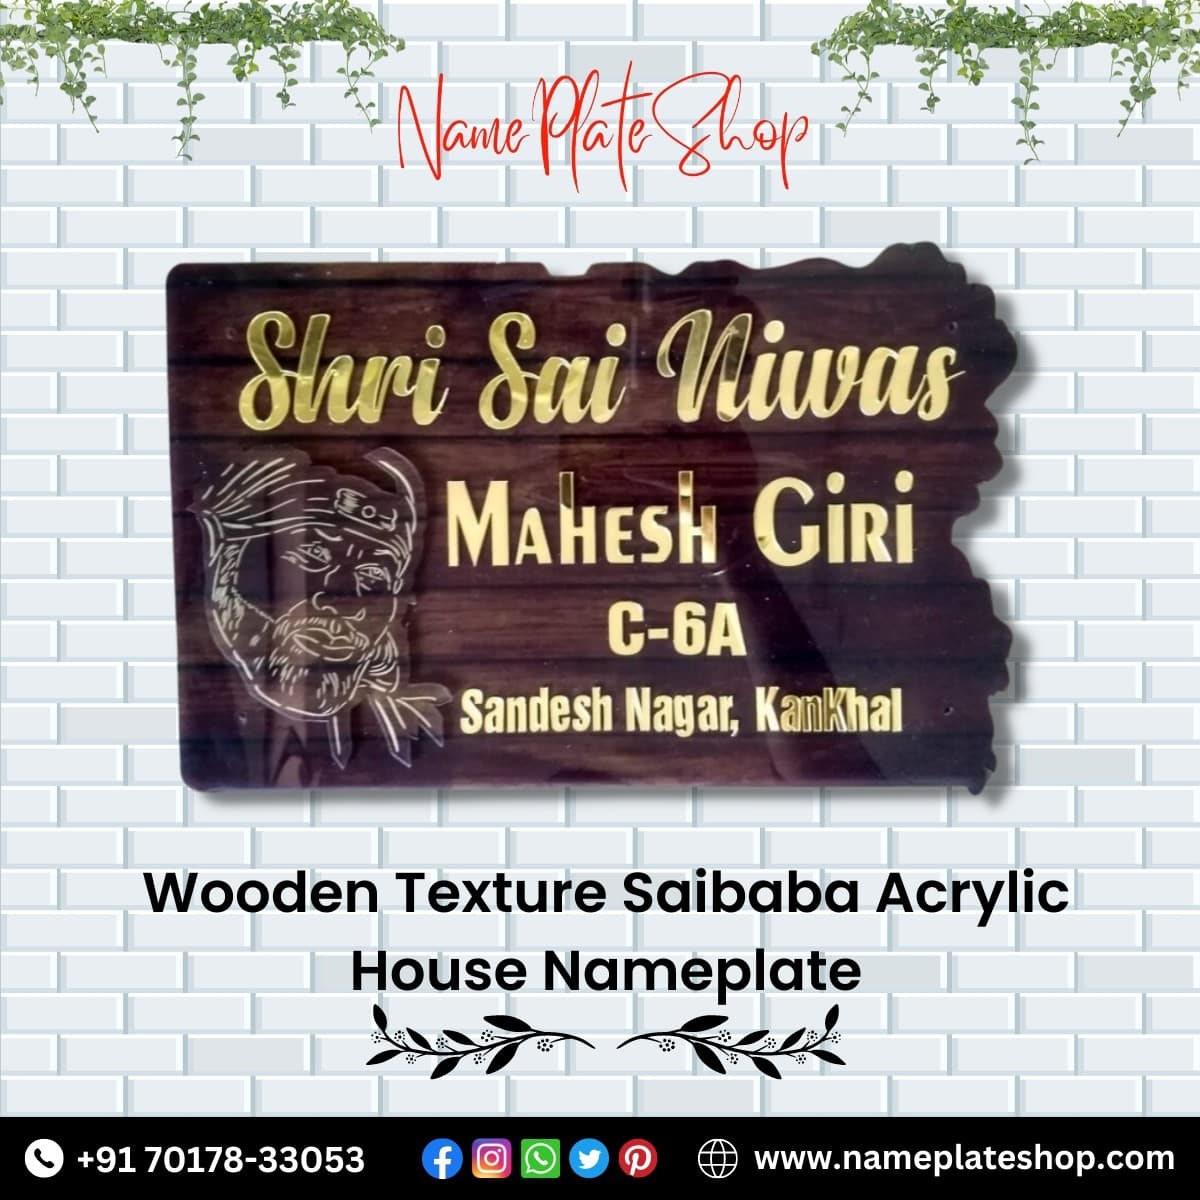 Wooden Texture Sai Baba Acrylic House Nameplate